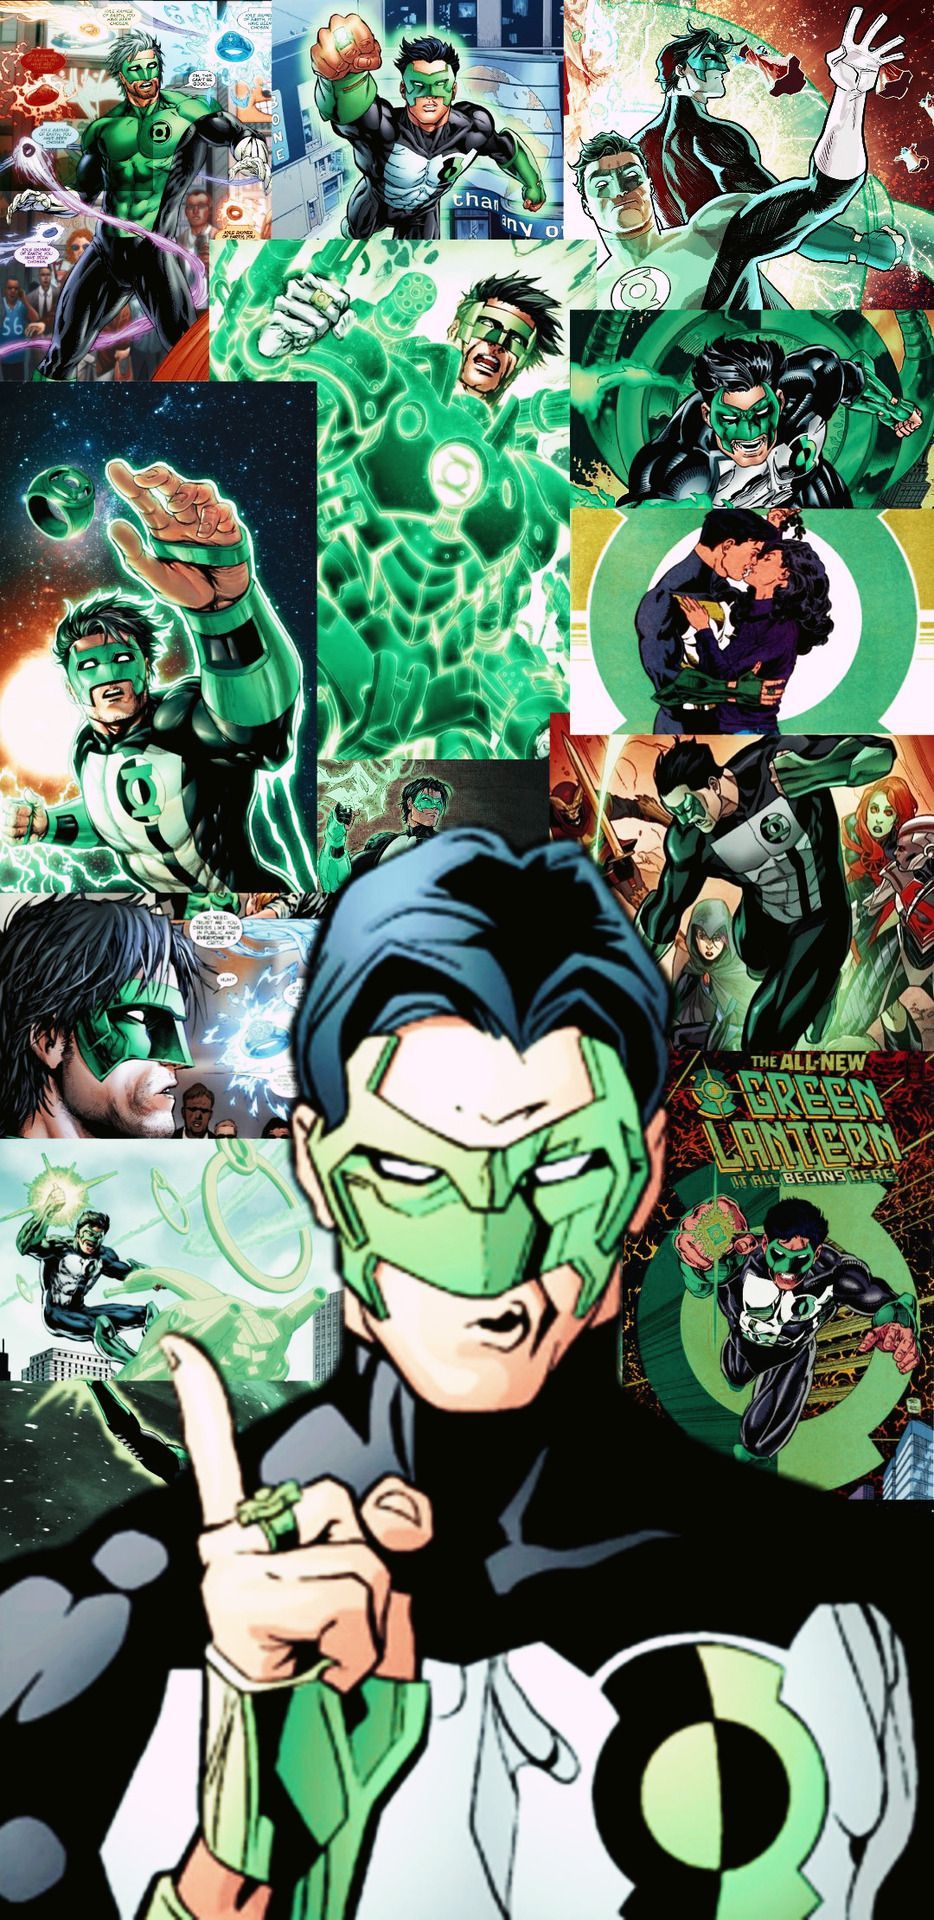 Green Lantern Corps Phone Wallpaper: Kyle Rayner. Green lantern wallpaper, Green lantern corps, Green lantern kyle rayner